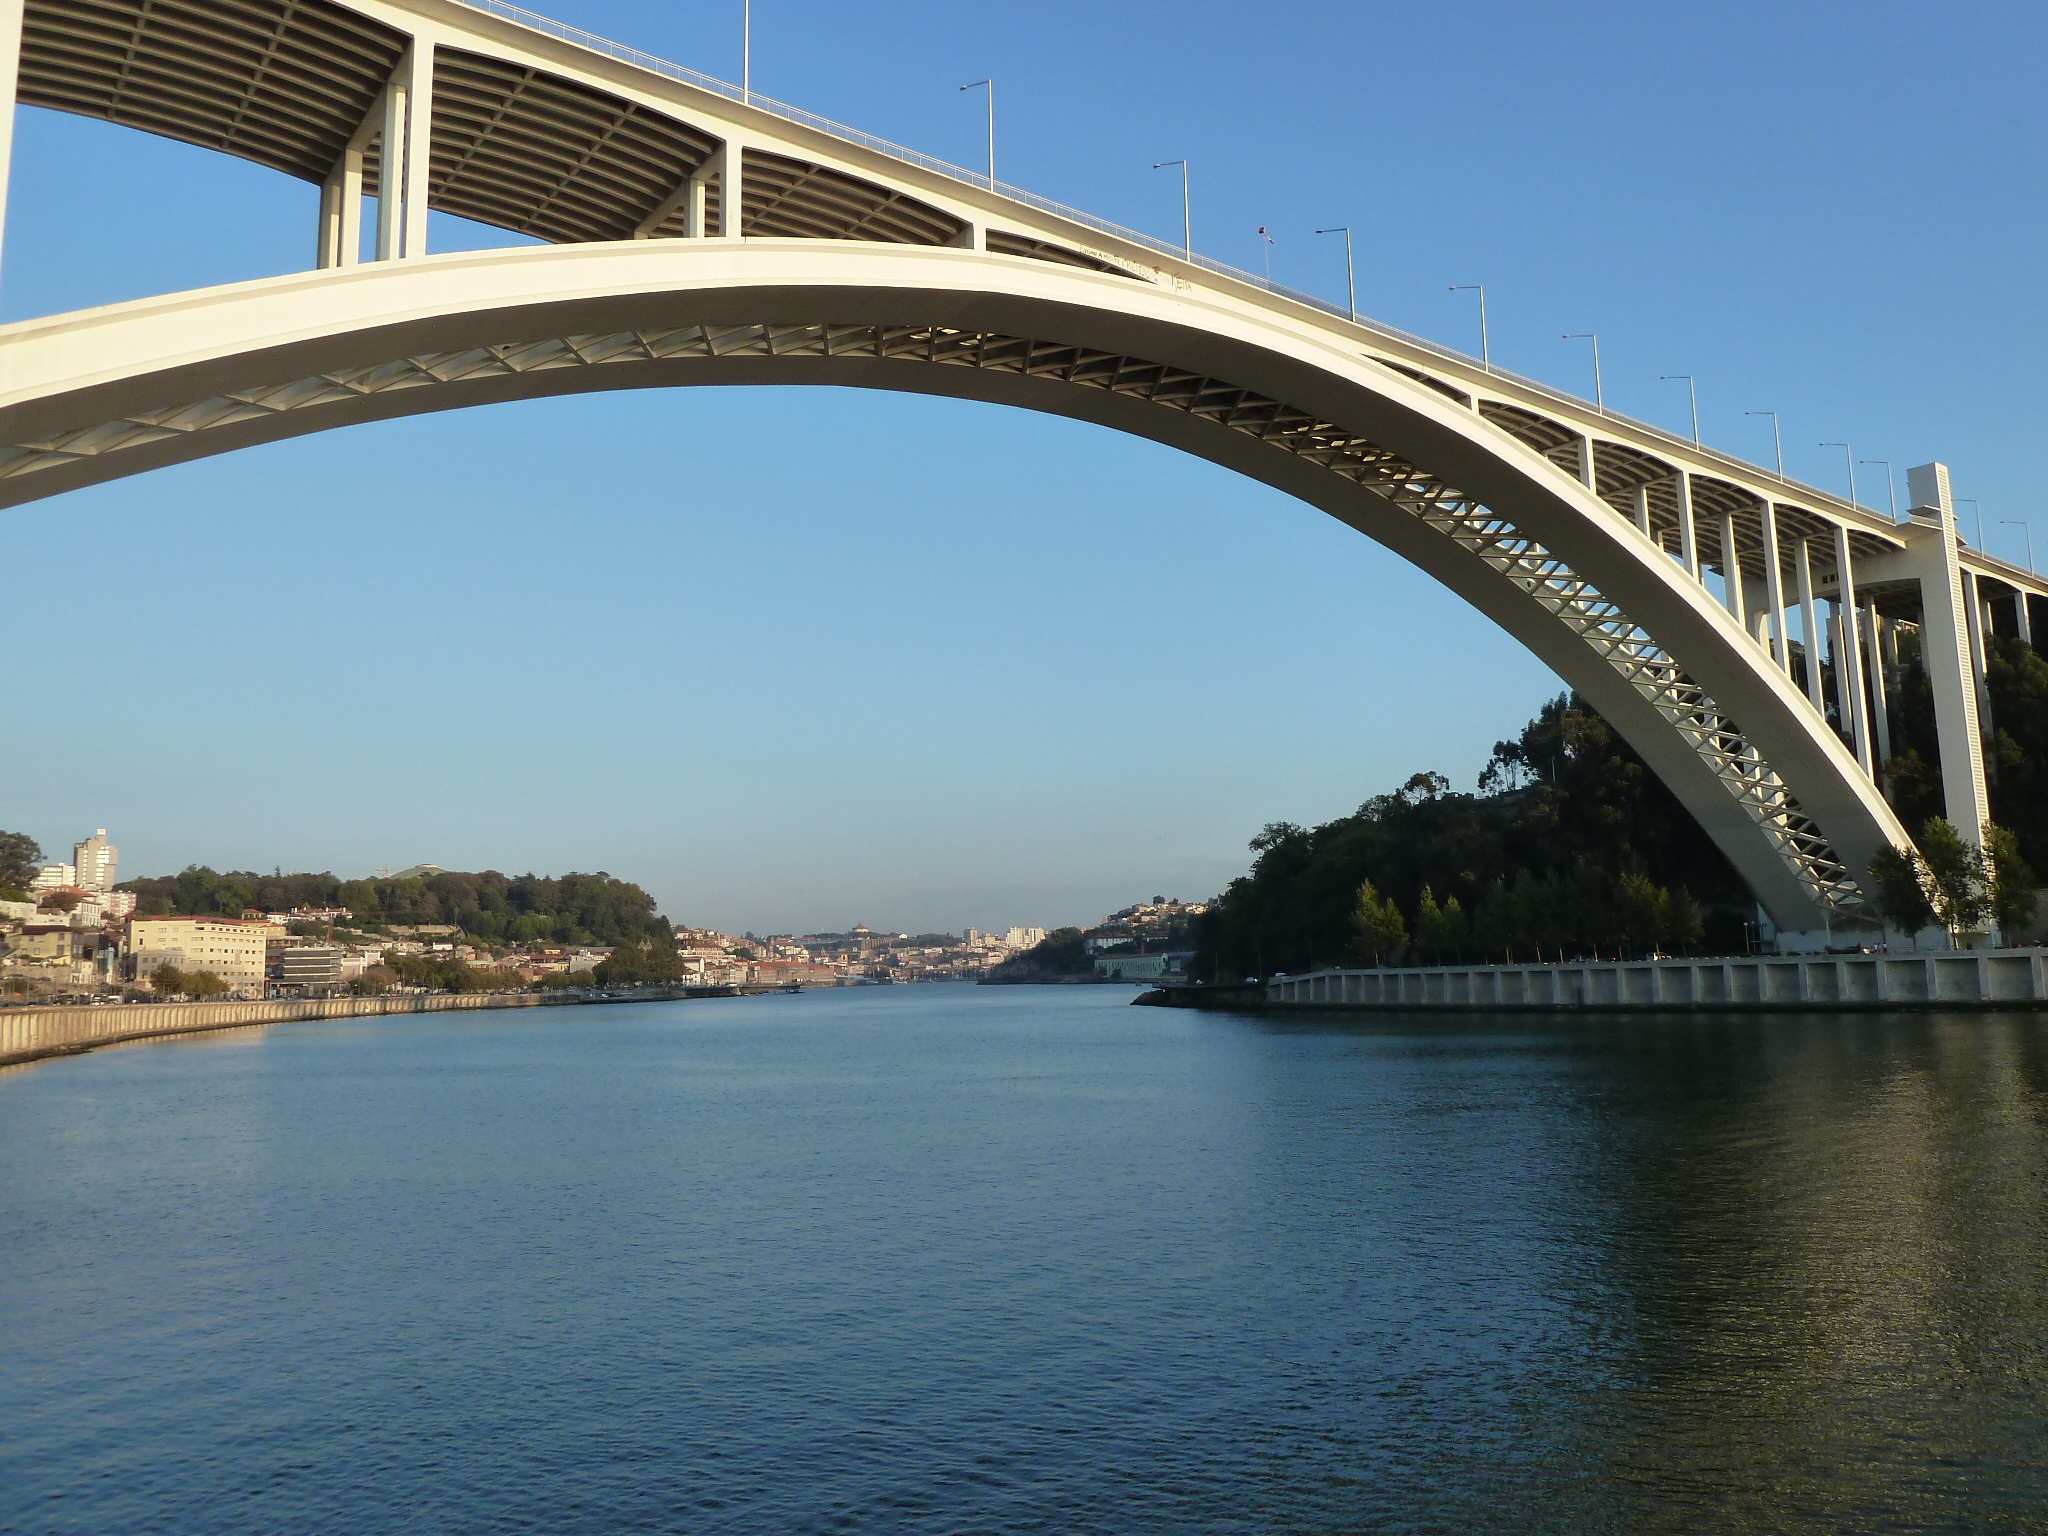 File:Ponte da Arrábida, Porto, Portugal.jpg - Wikimedia Commons